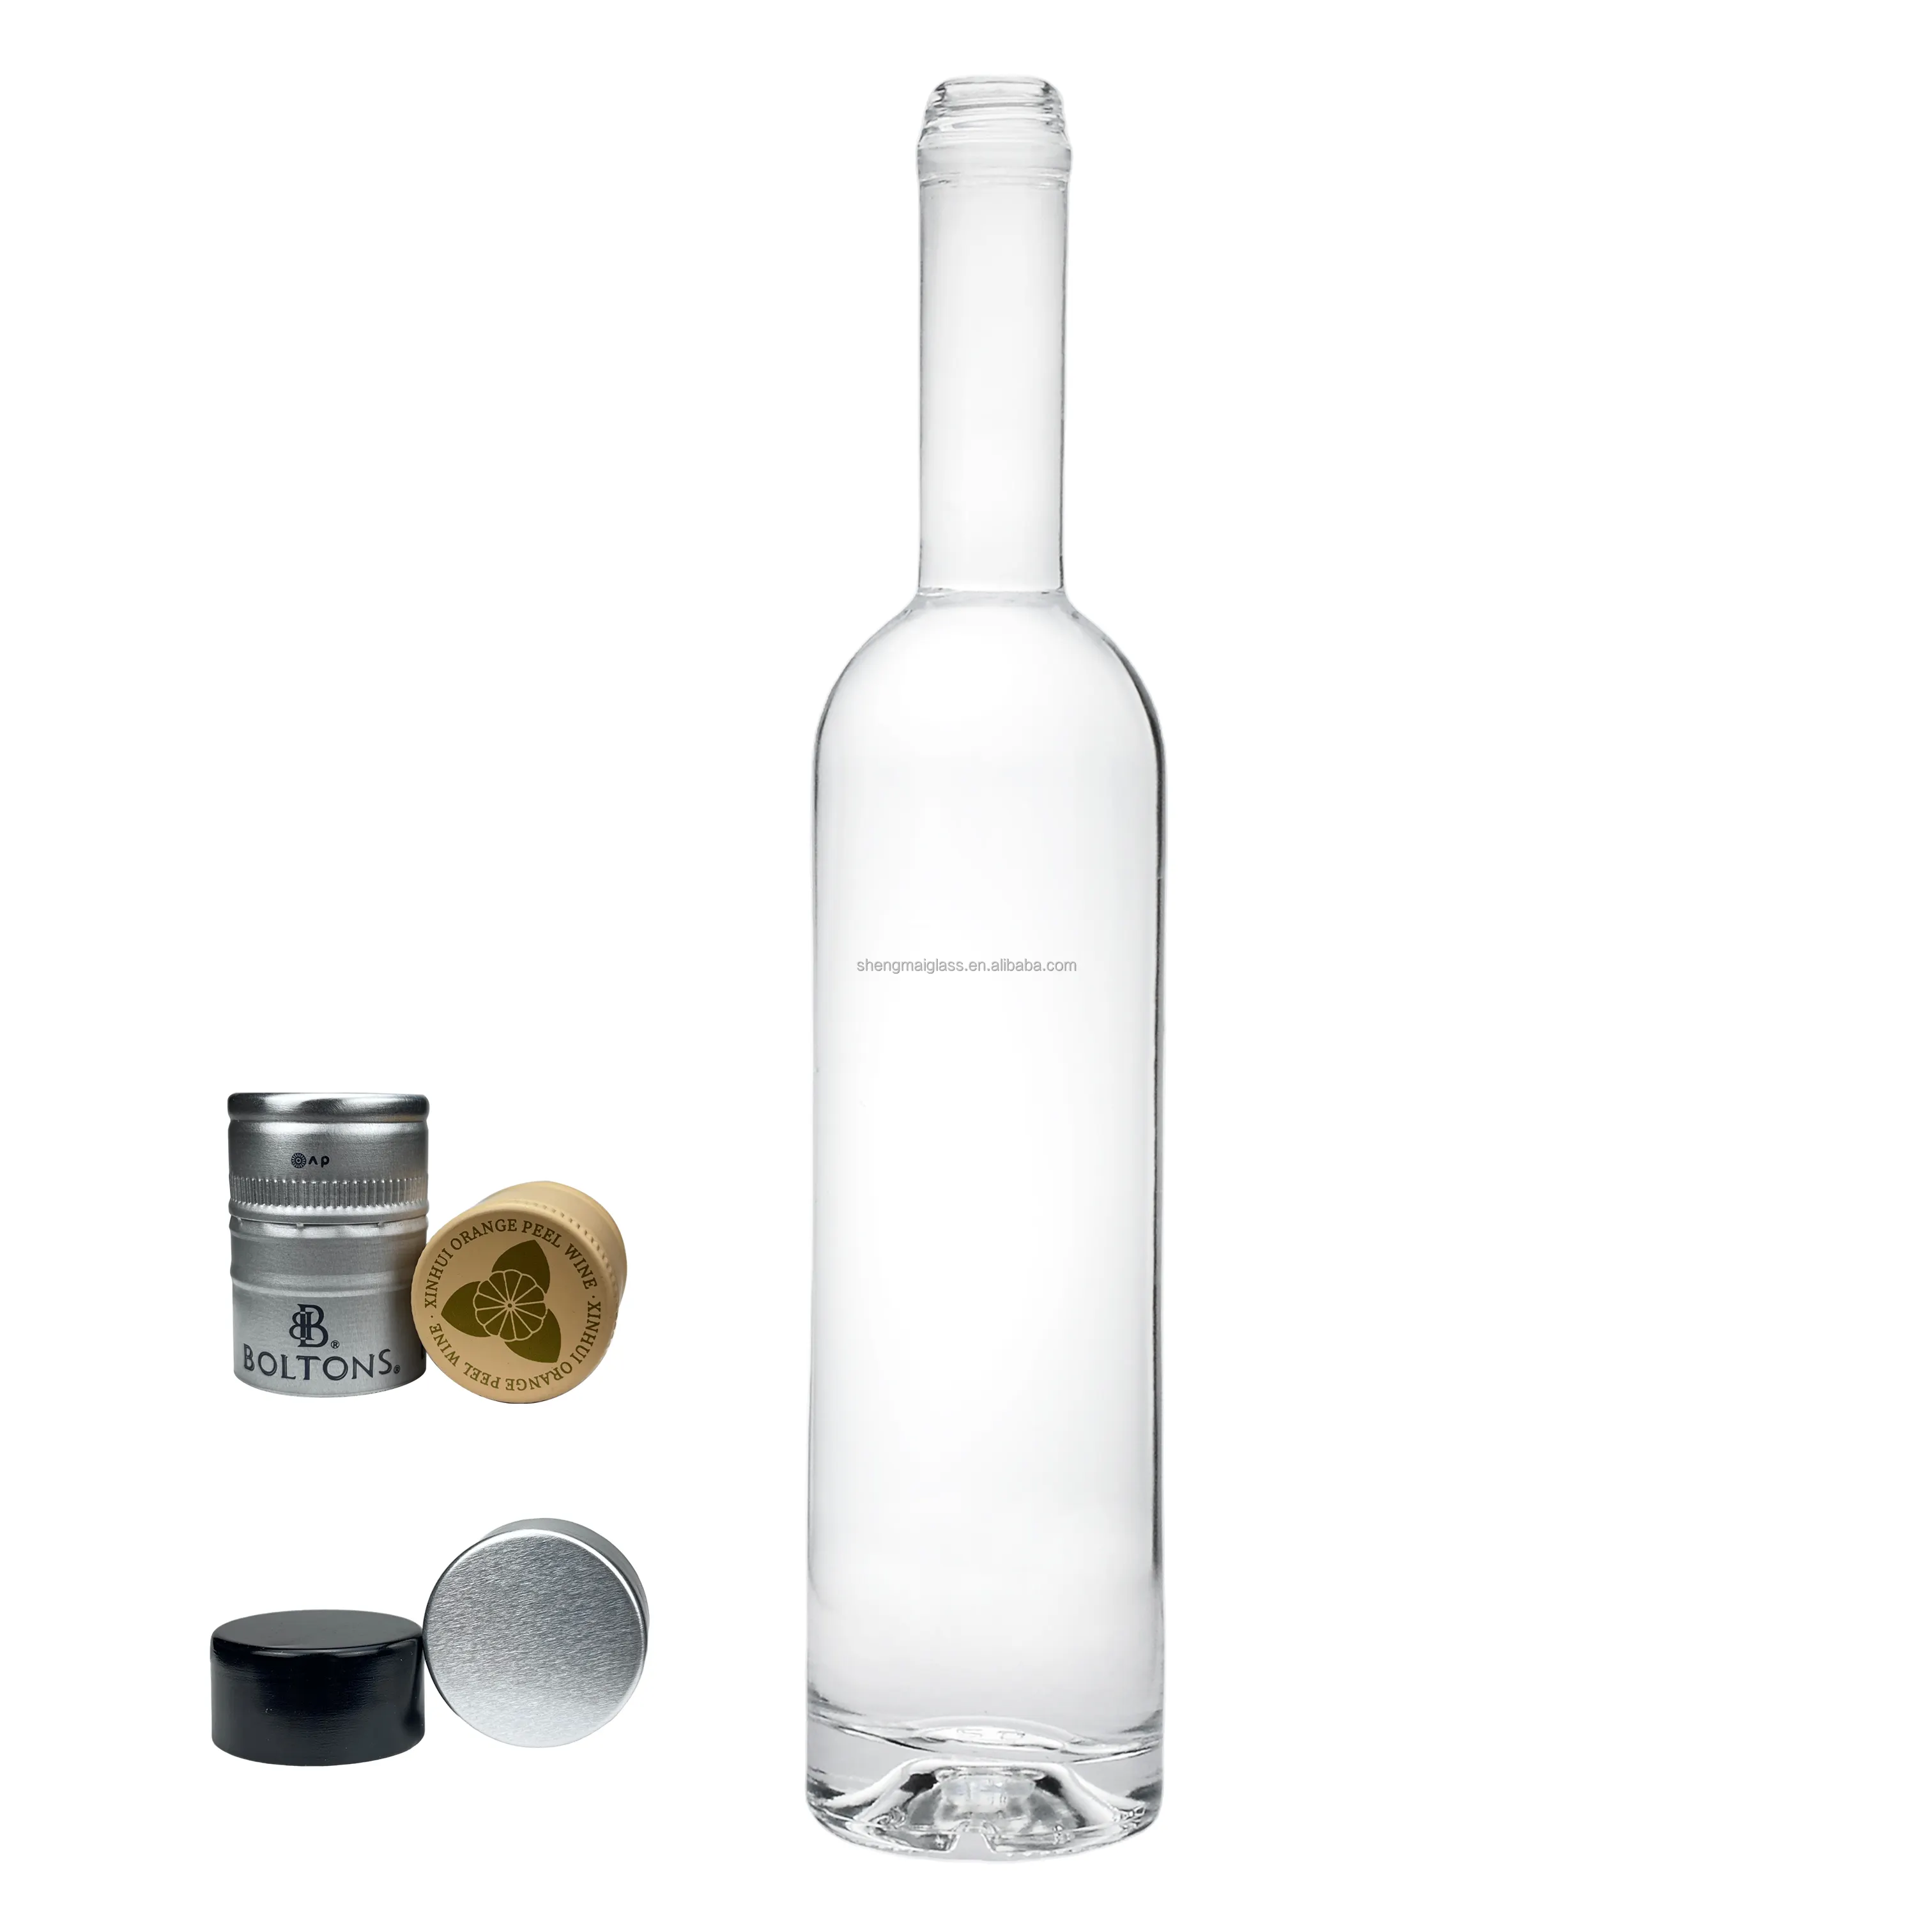 700ml 750ml glasflaschen Whisky Chai Thủy Tinh Rượu Vang chai rượu vang chai thủy tinh cho rượu Whisky Vodka botella de vidrio nước giải khát